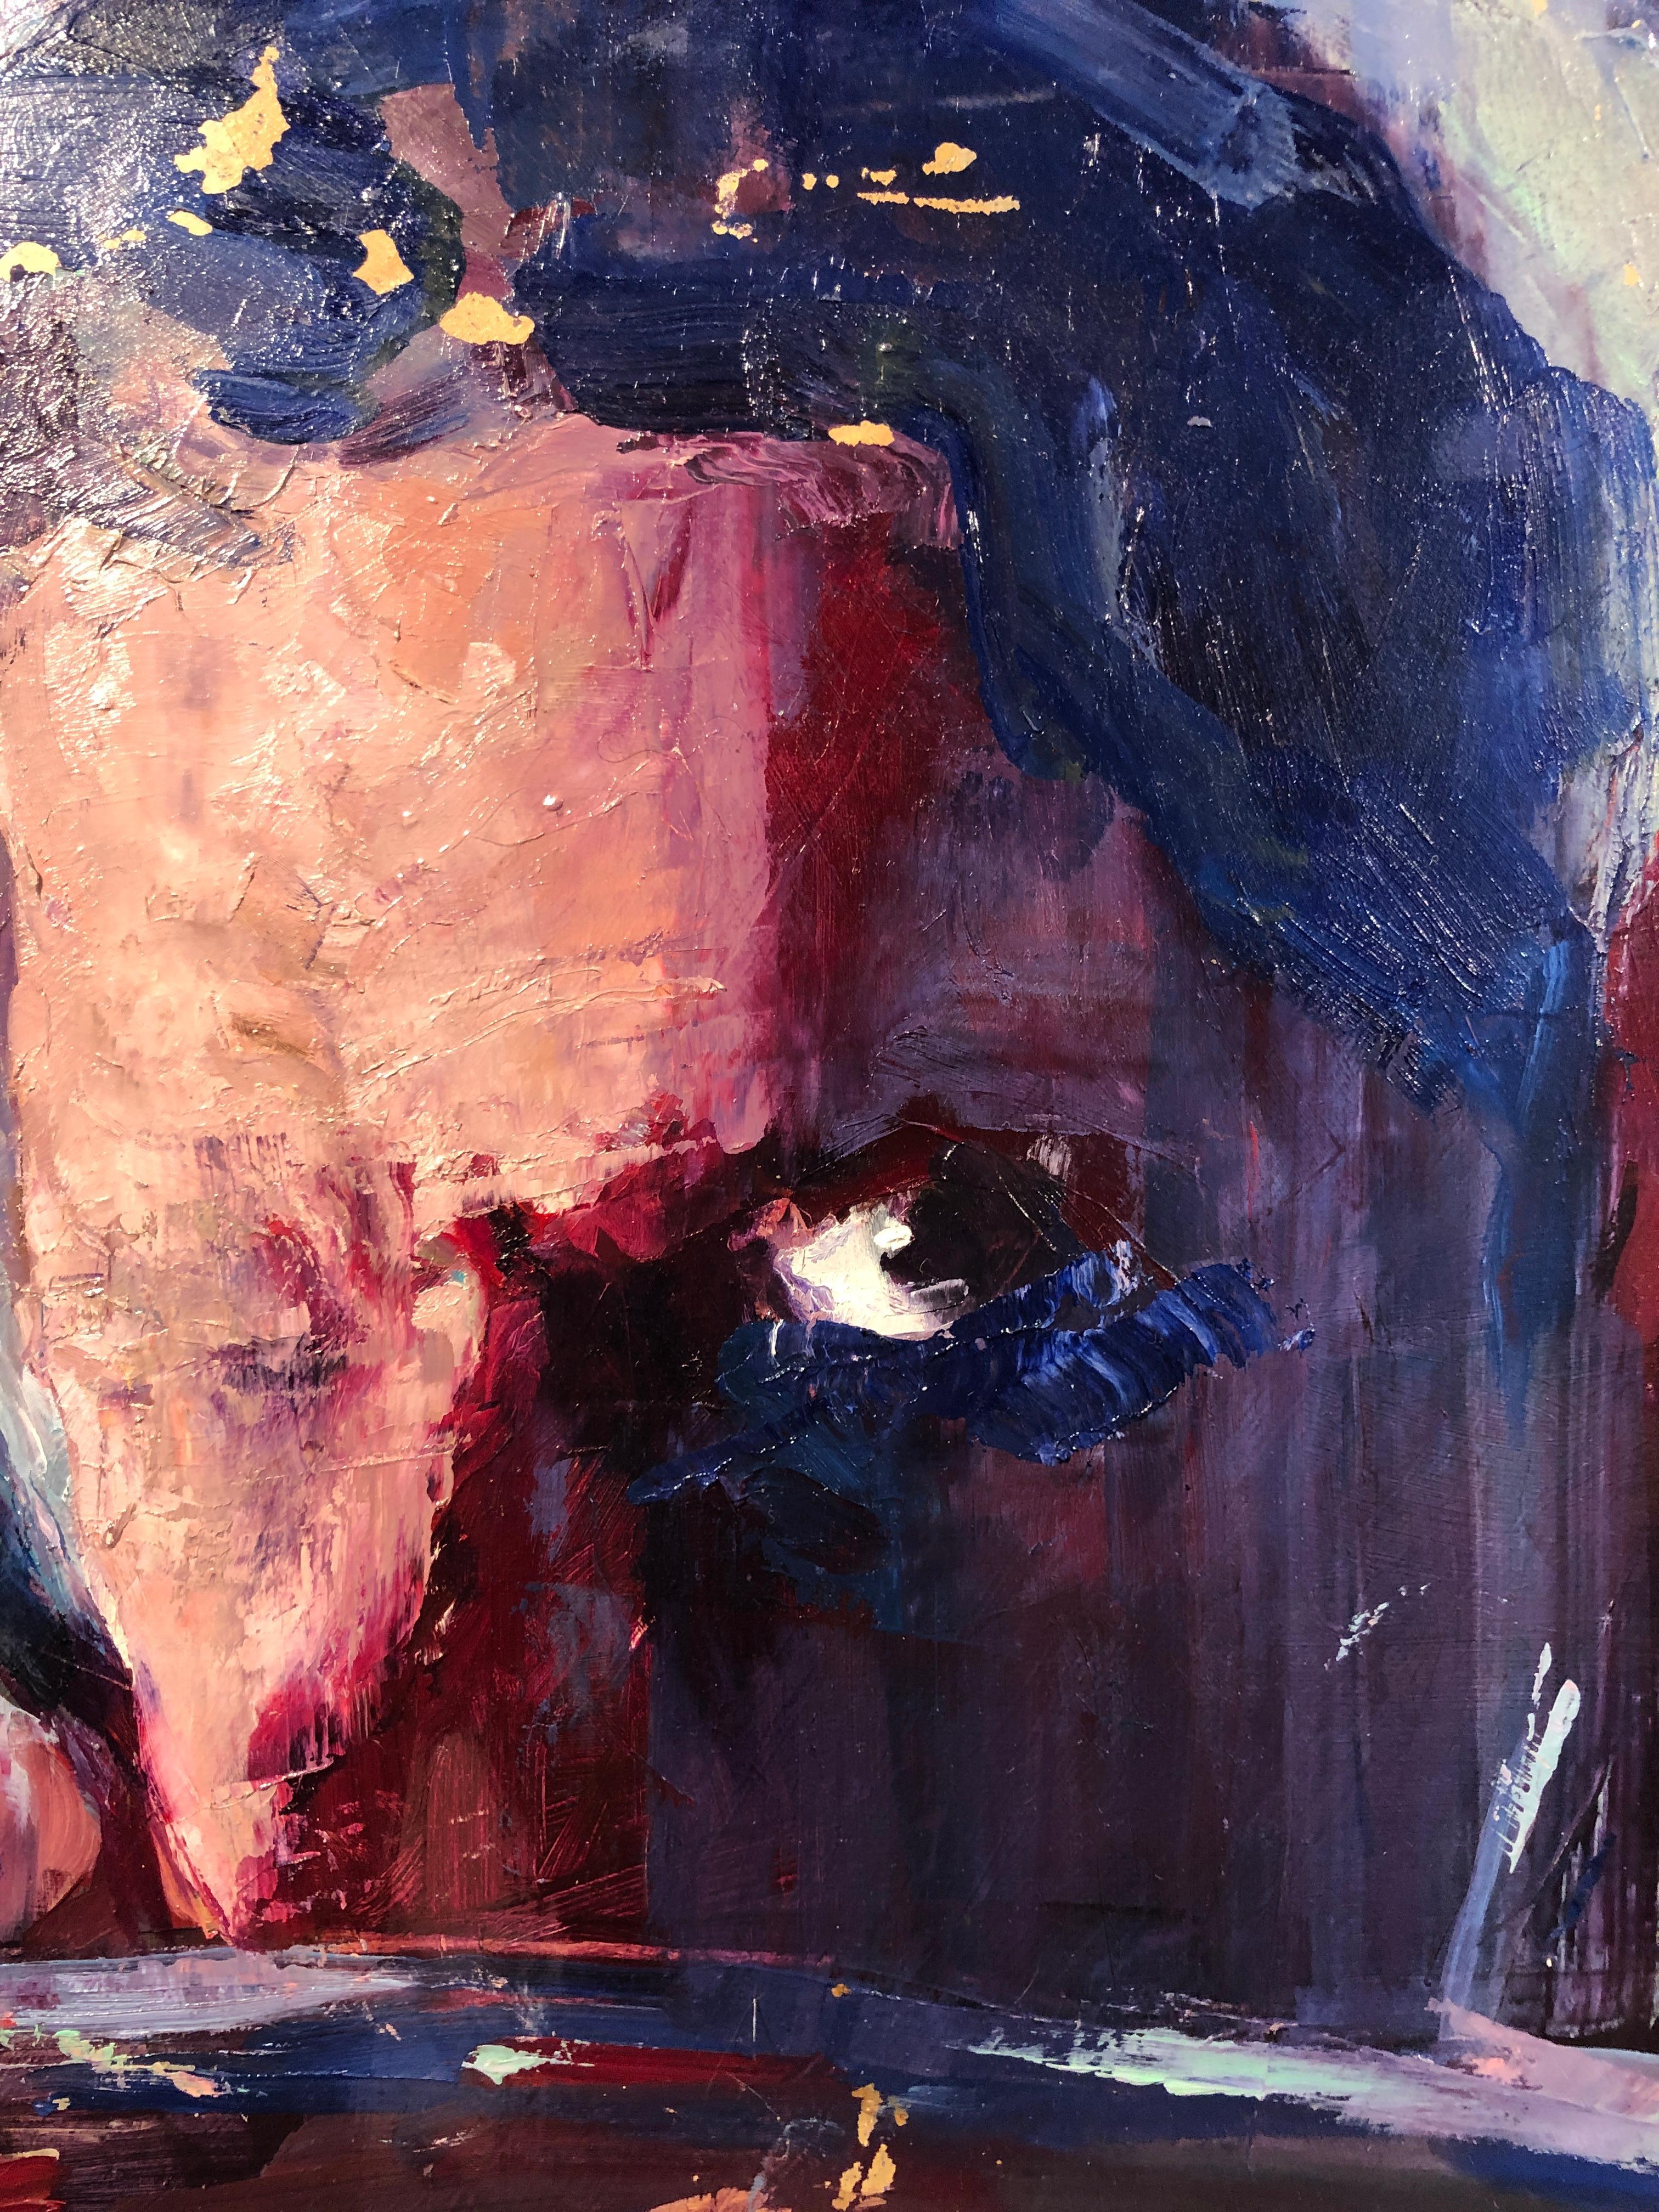 Rabid - Cinema Inspired One Eyed Male Figure, Oil Painting on Panel - Black Interior Painting by Georgia Hinaris